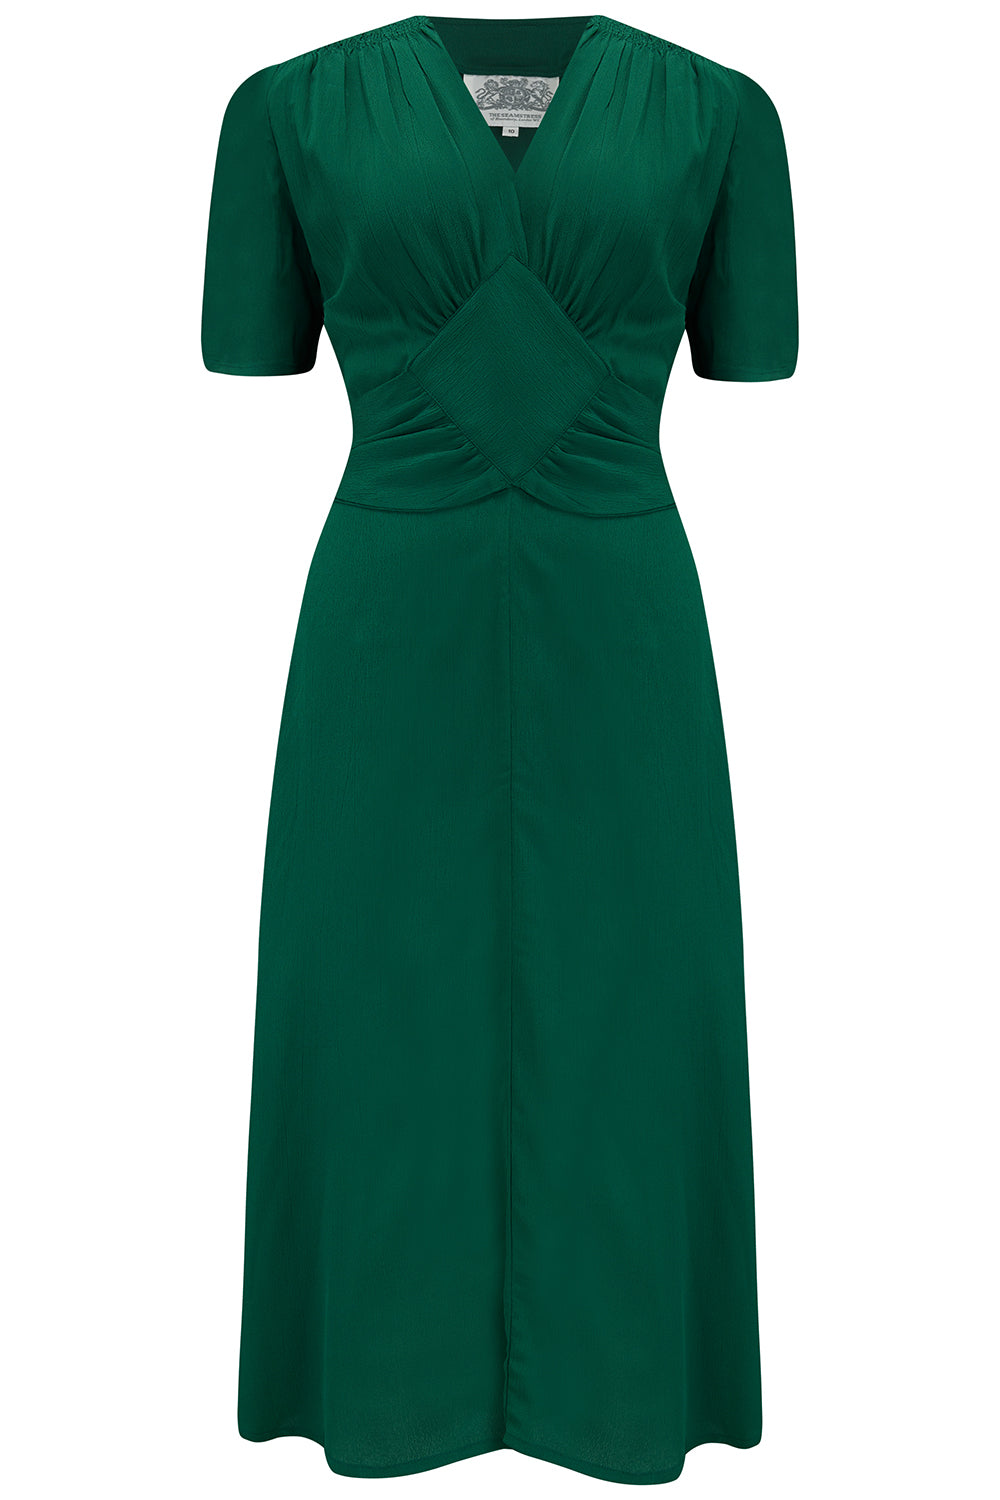 1940s Dresses | 40s Dress, Swing Dress, Tea Dresses The Ruby Dress in Green Classic 1940s Style Long Sleeve Dress £89.95 AT vintagedancer.com